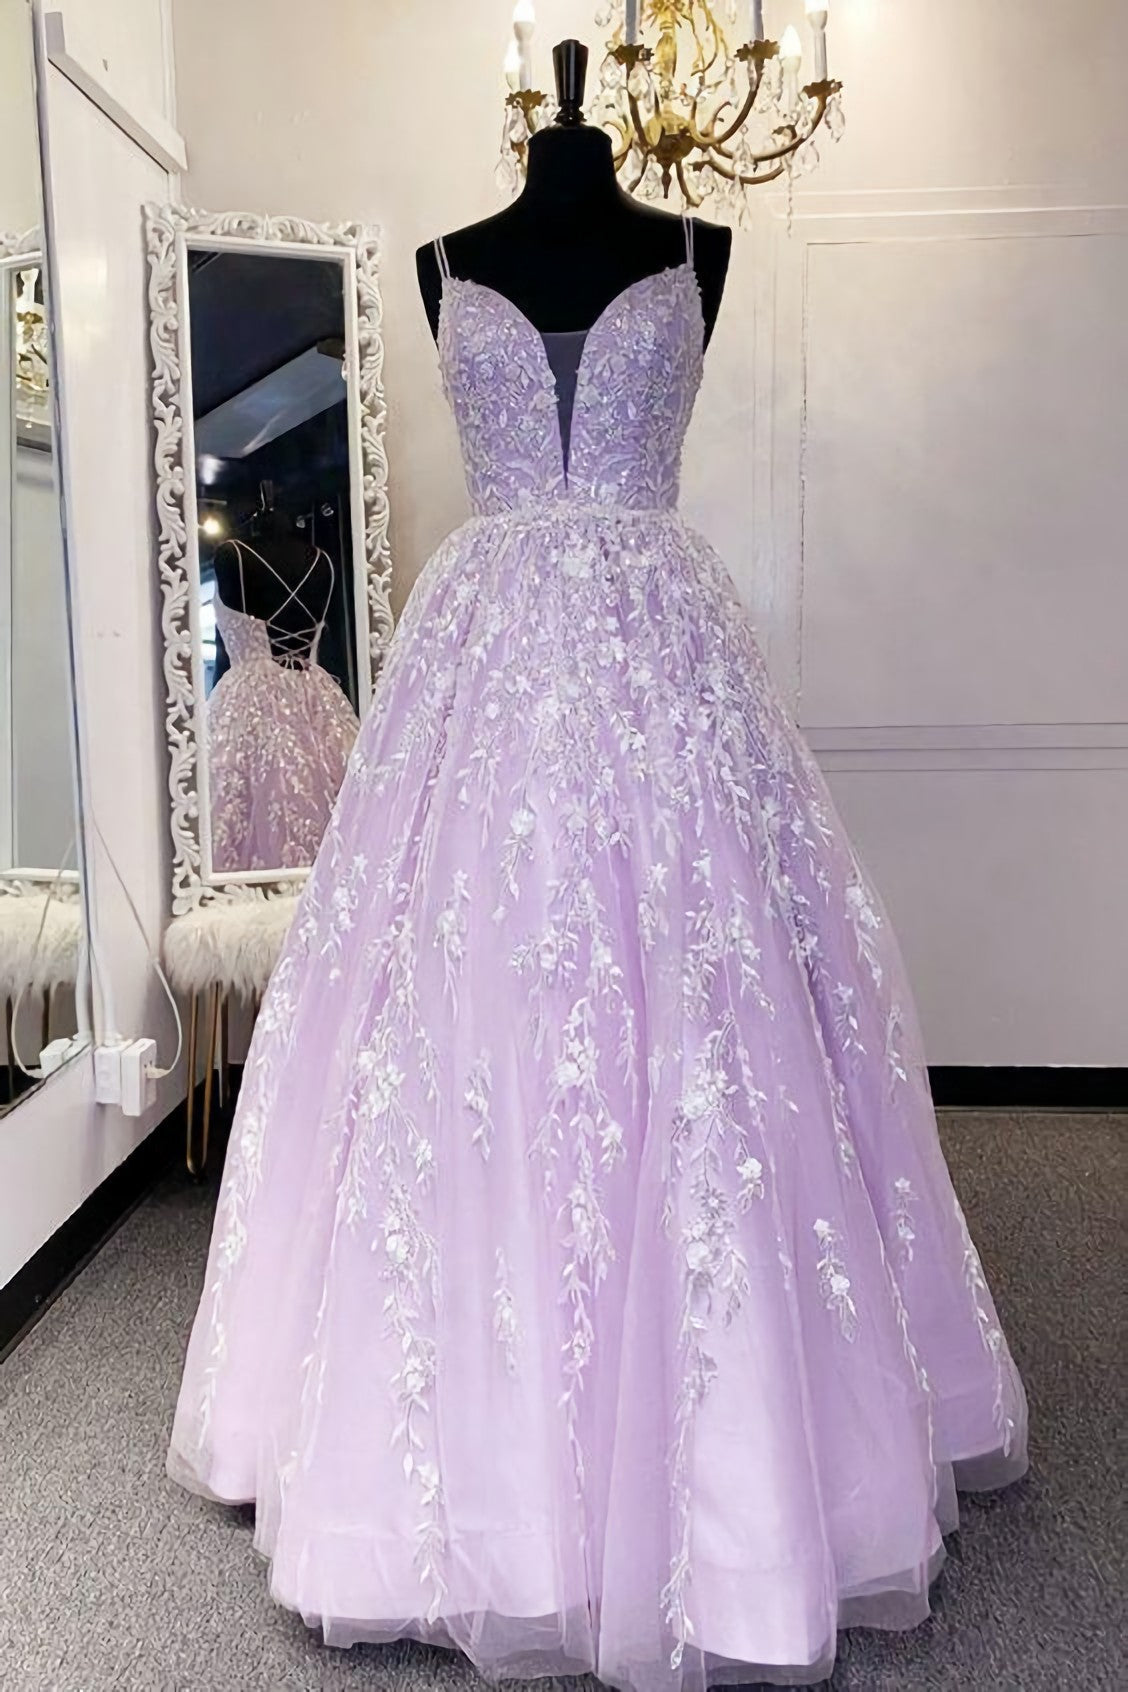 Party Dress Ideas For Curvy Figure, A Line Lilac A Line Long Formal Dress, Prom Dress